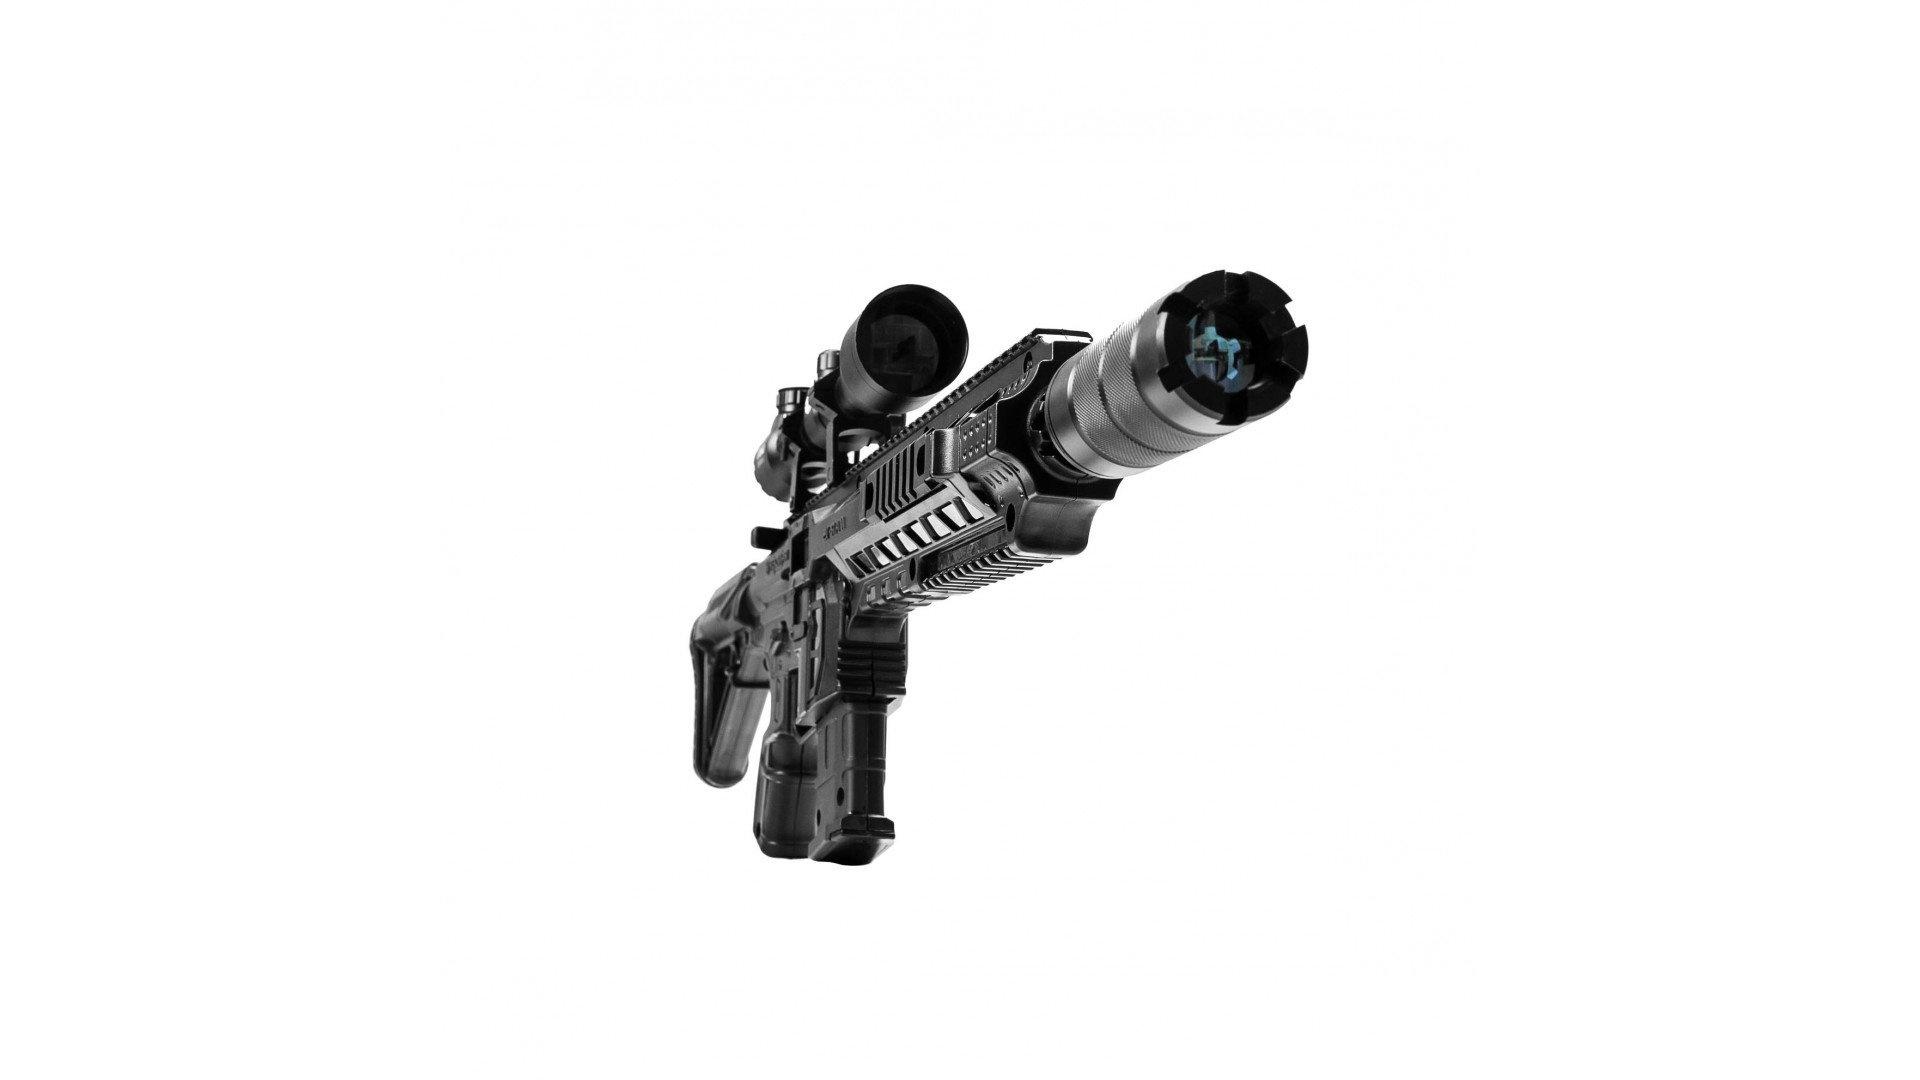 SR21 Berserk sniper rifle for laser tag games